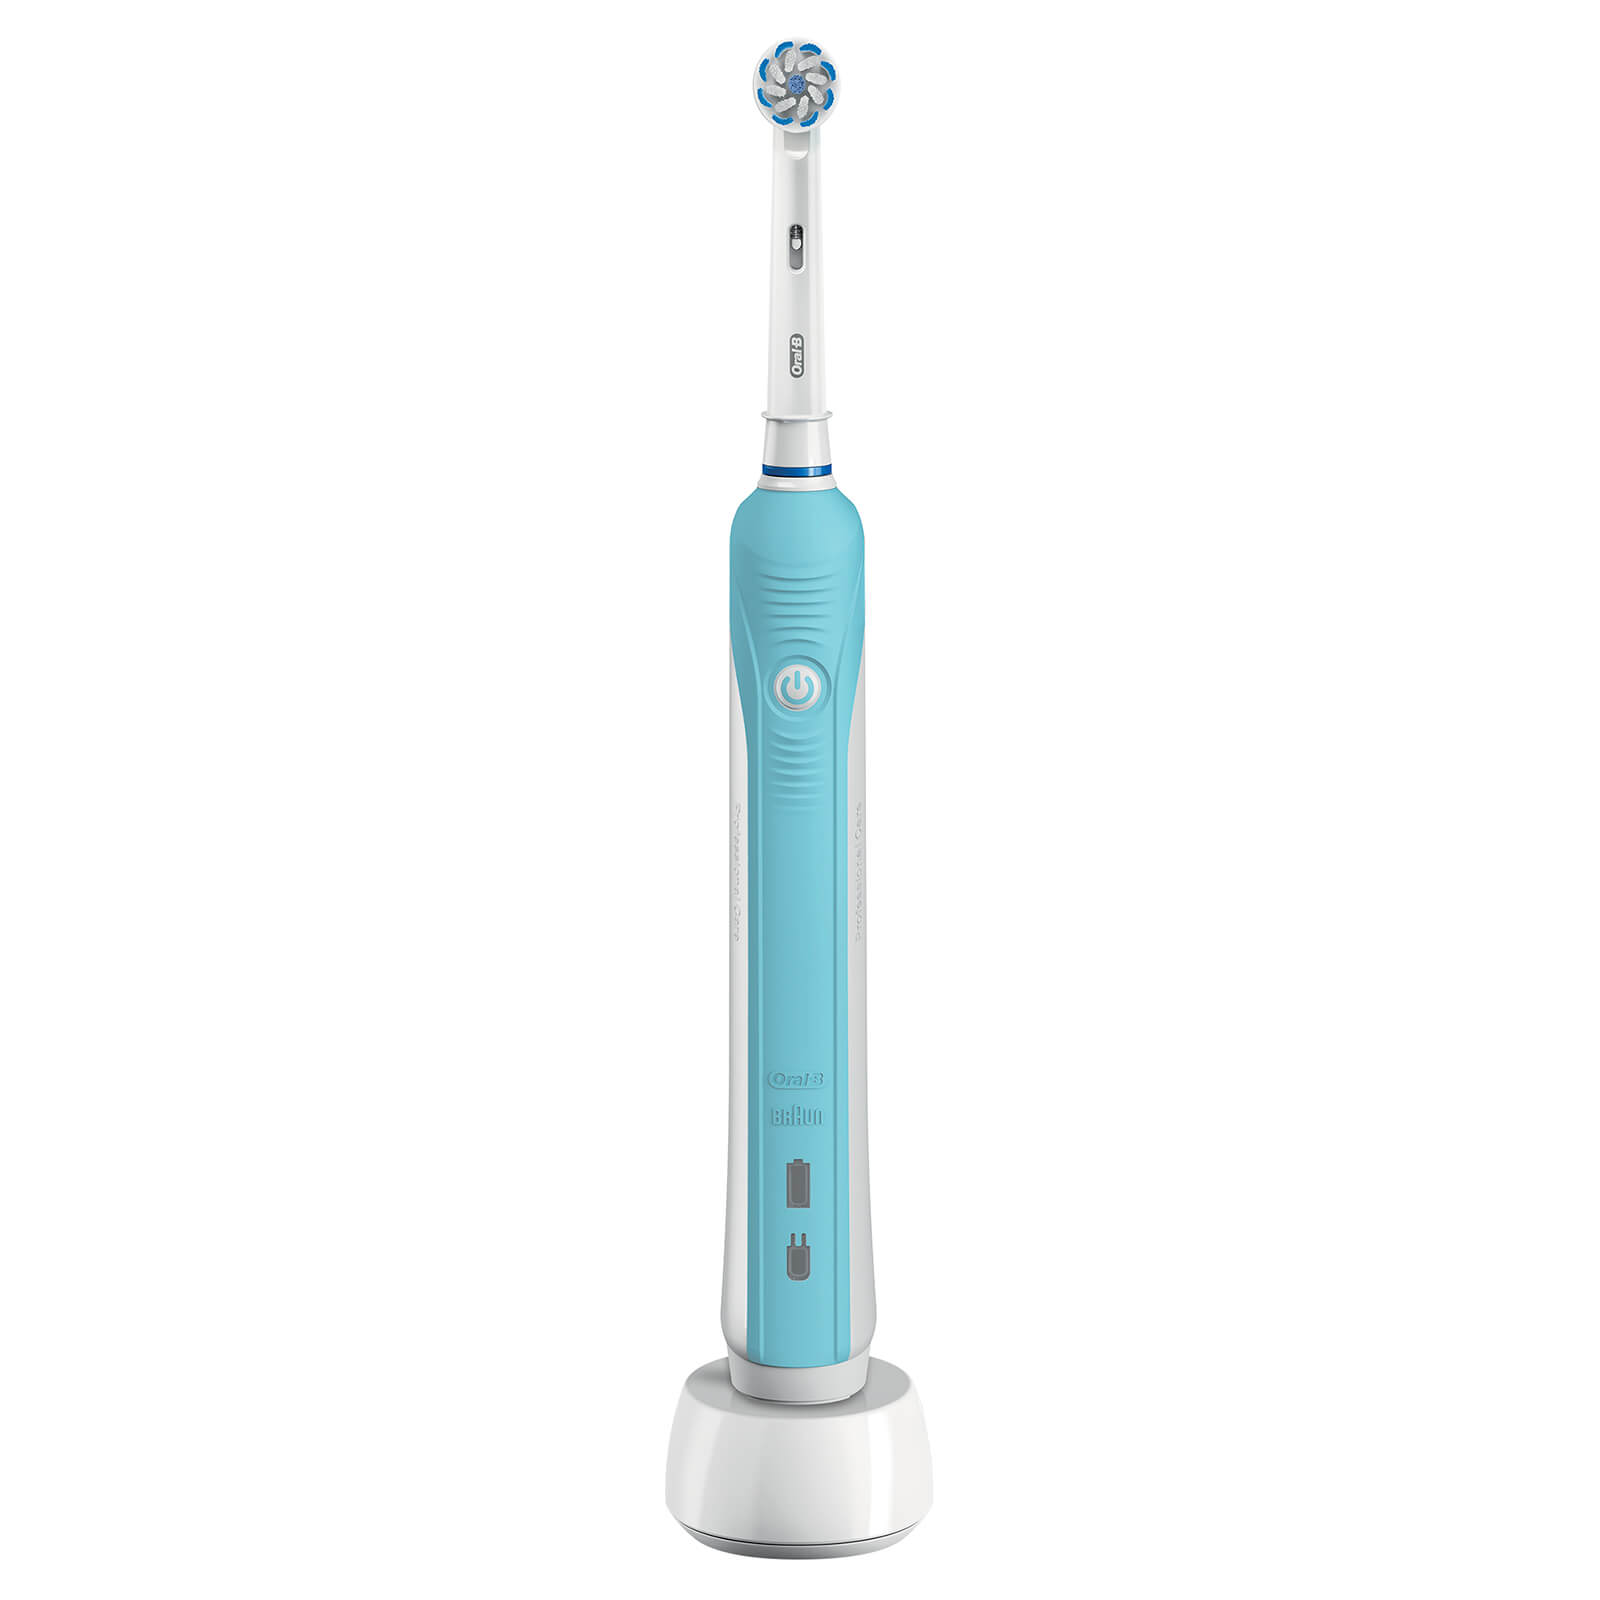 Oral B Pro 600 Sensi UltraThin Power Handle Electric Toothbrush - Blue